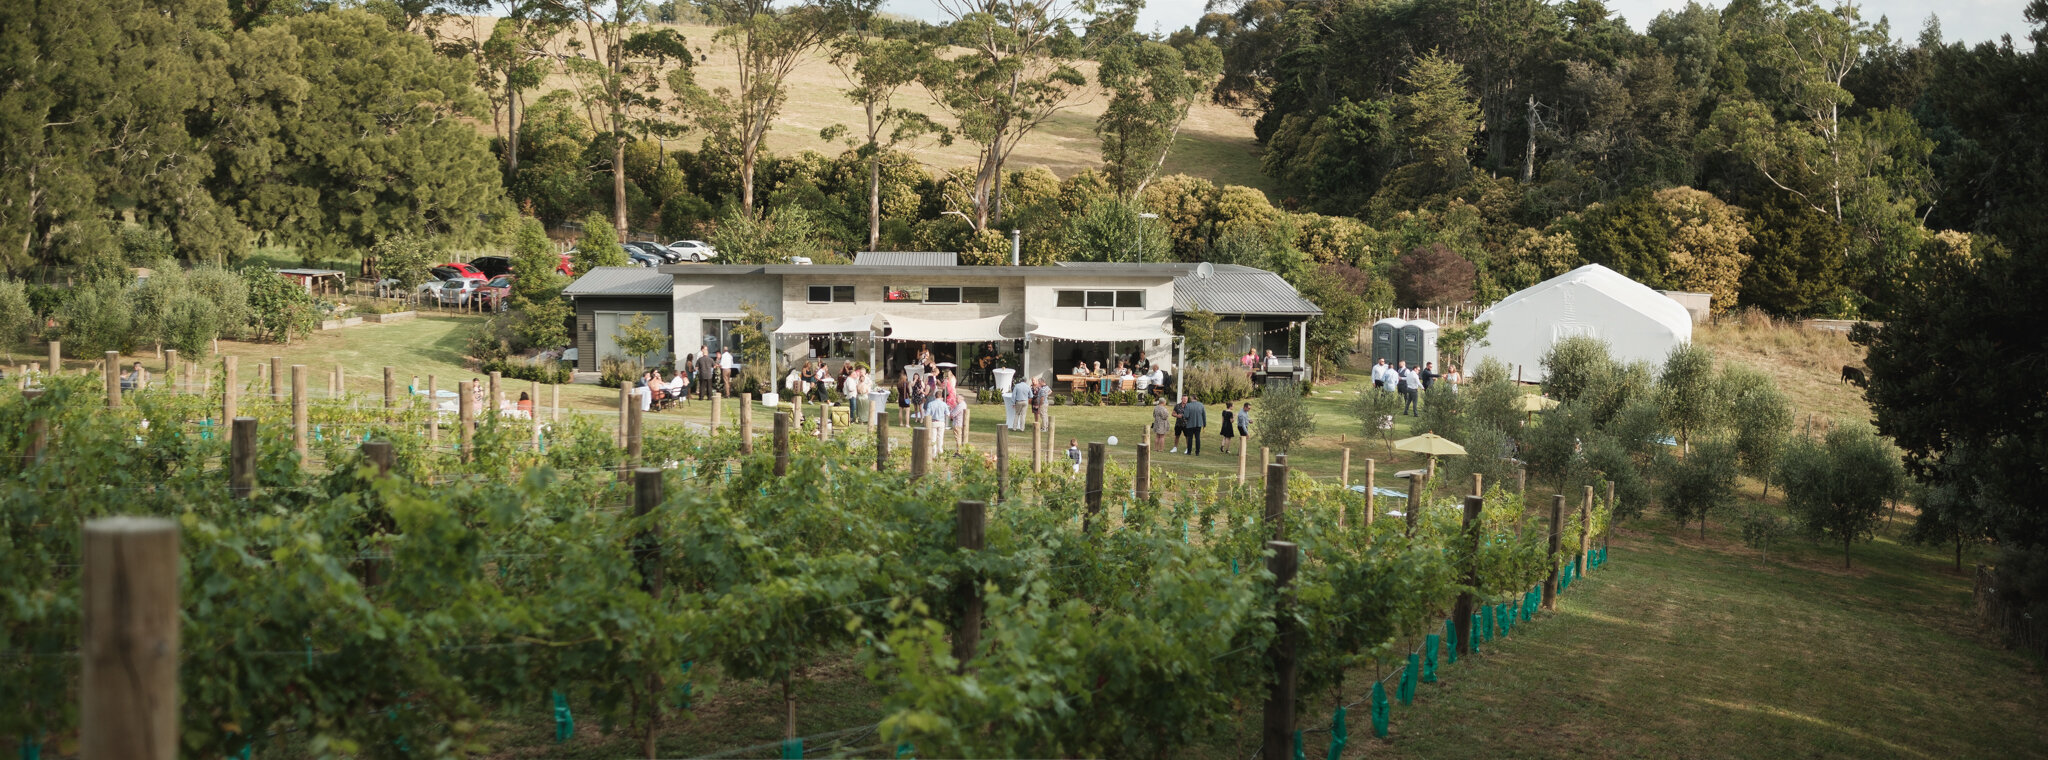 Wedding venue at vineyard